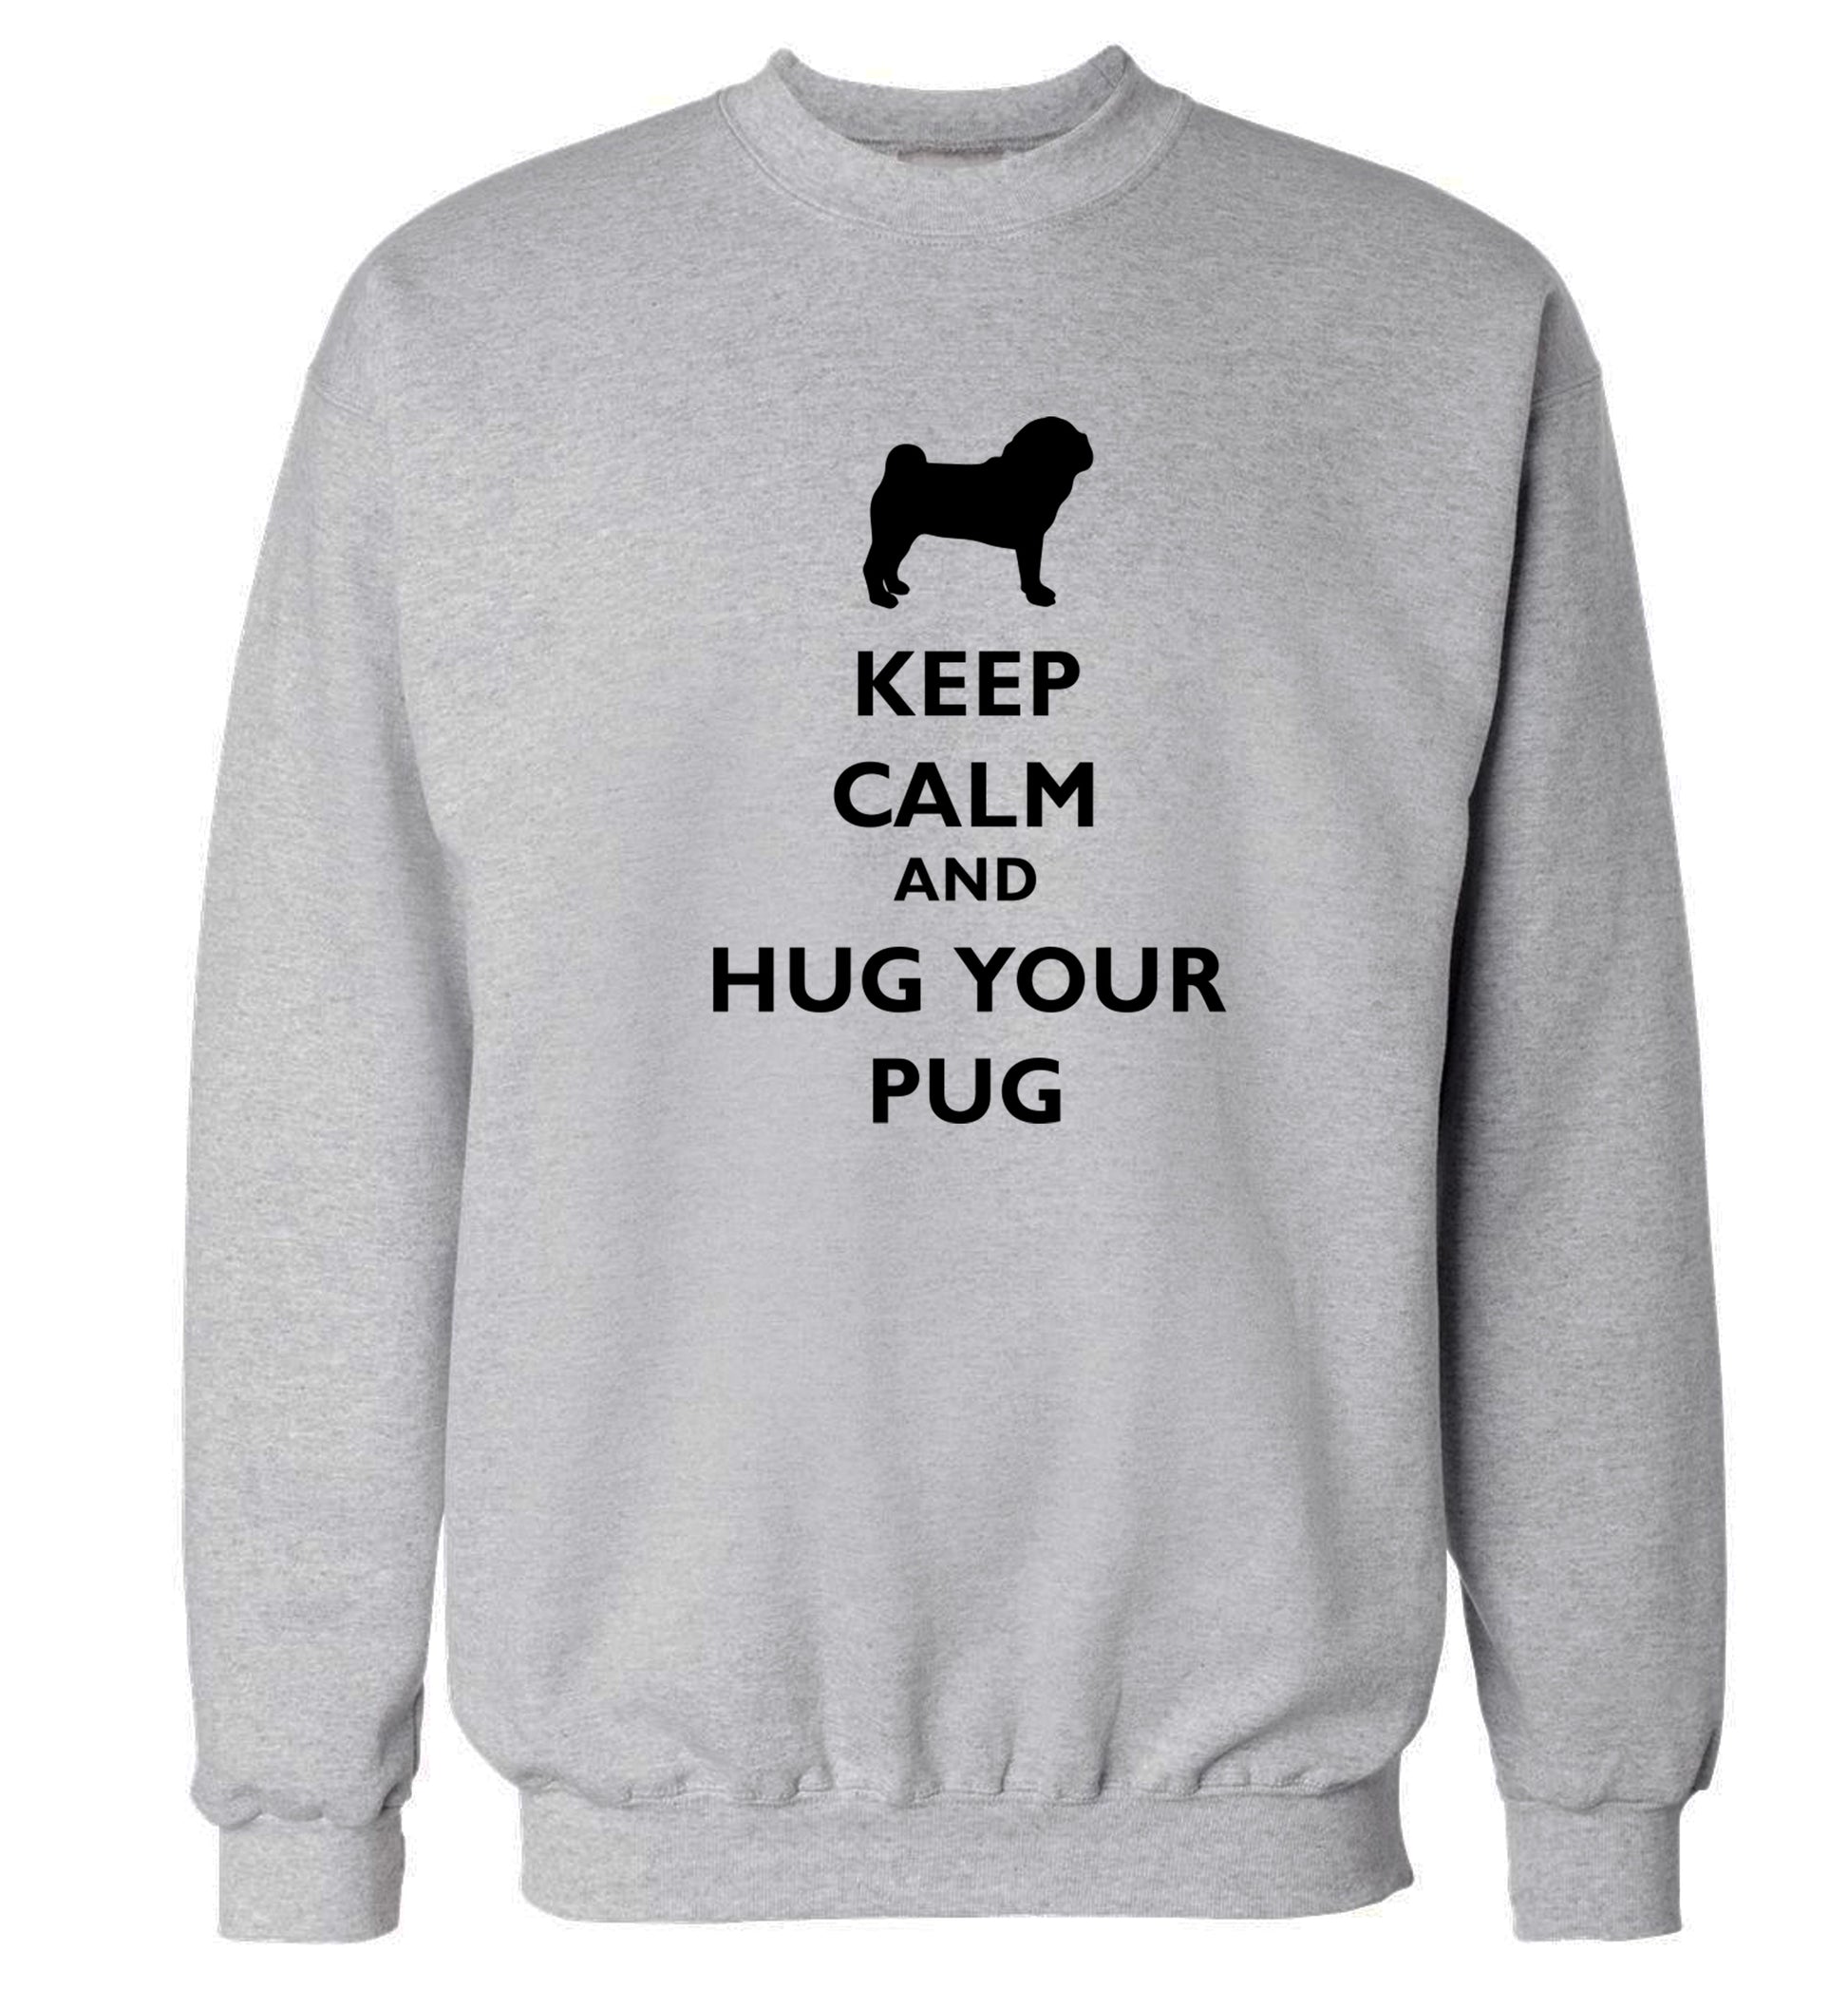 Keep calm and hug your pug Adult's unisex grey Sweater 2XL